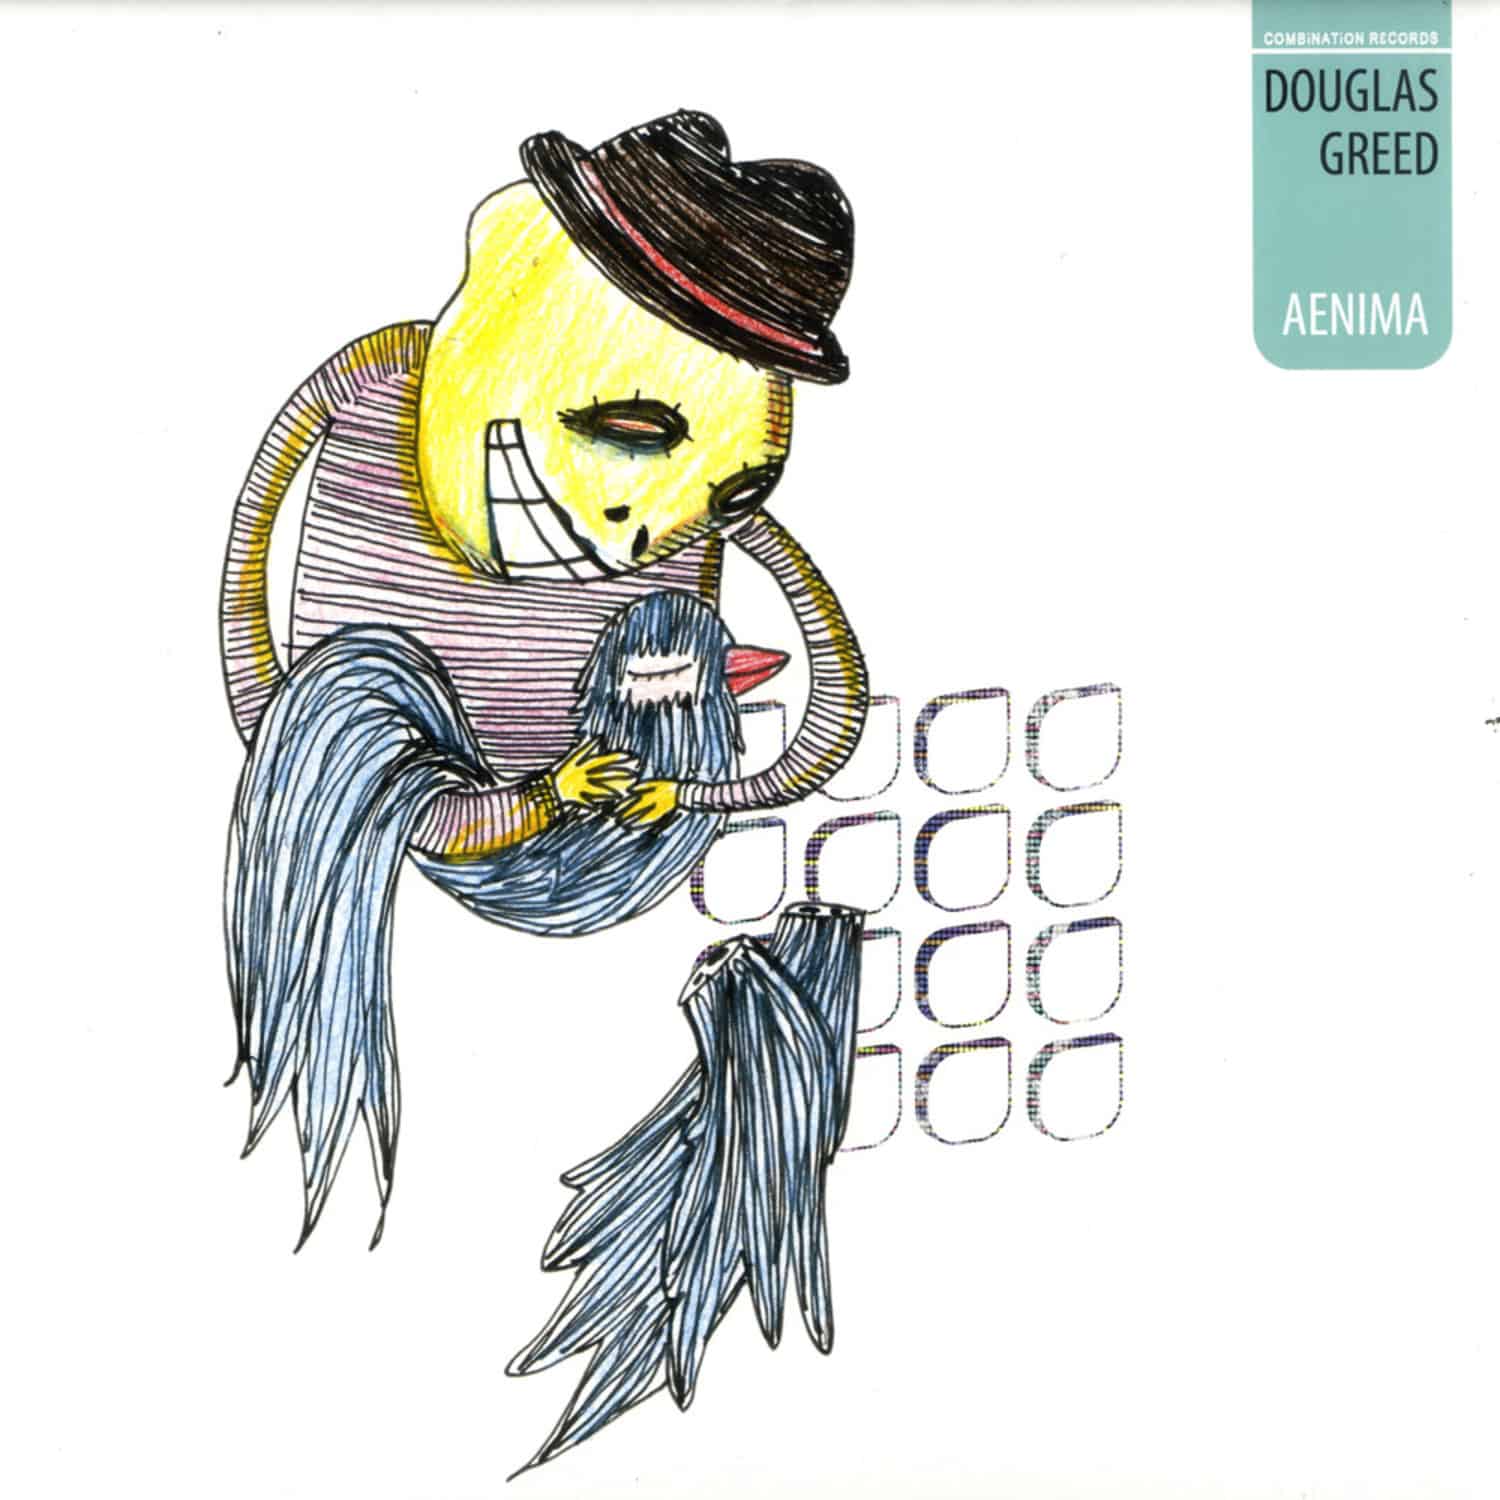 Douglas Greed - AENIMA